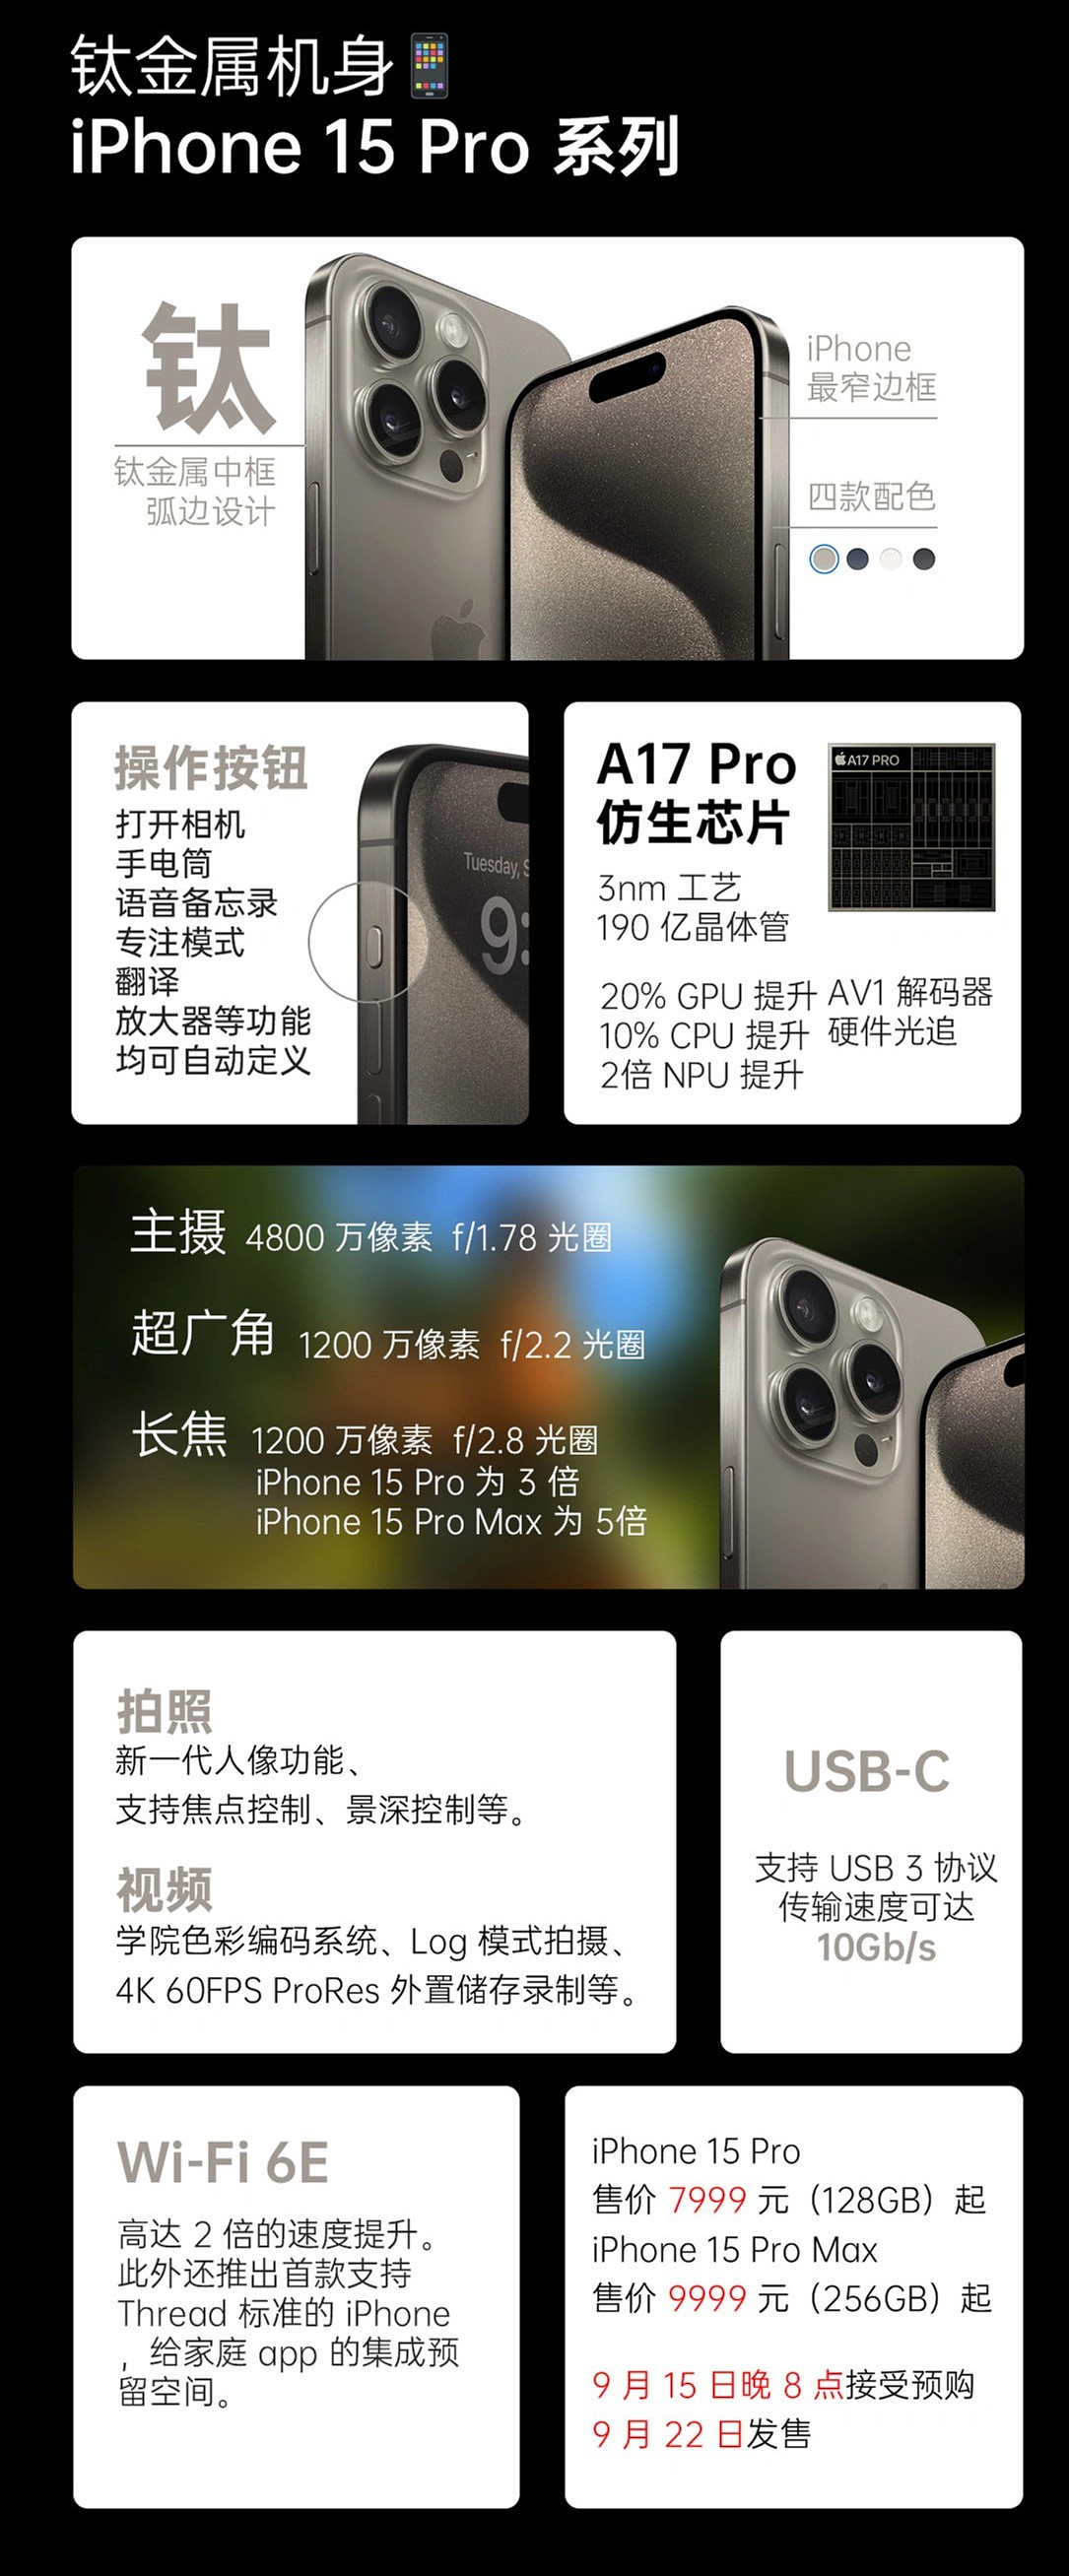 iPhone 15 / Pro 全系立减 1050 元 + 12 期免息：京东苹果年货节大促开启 - 2